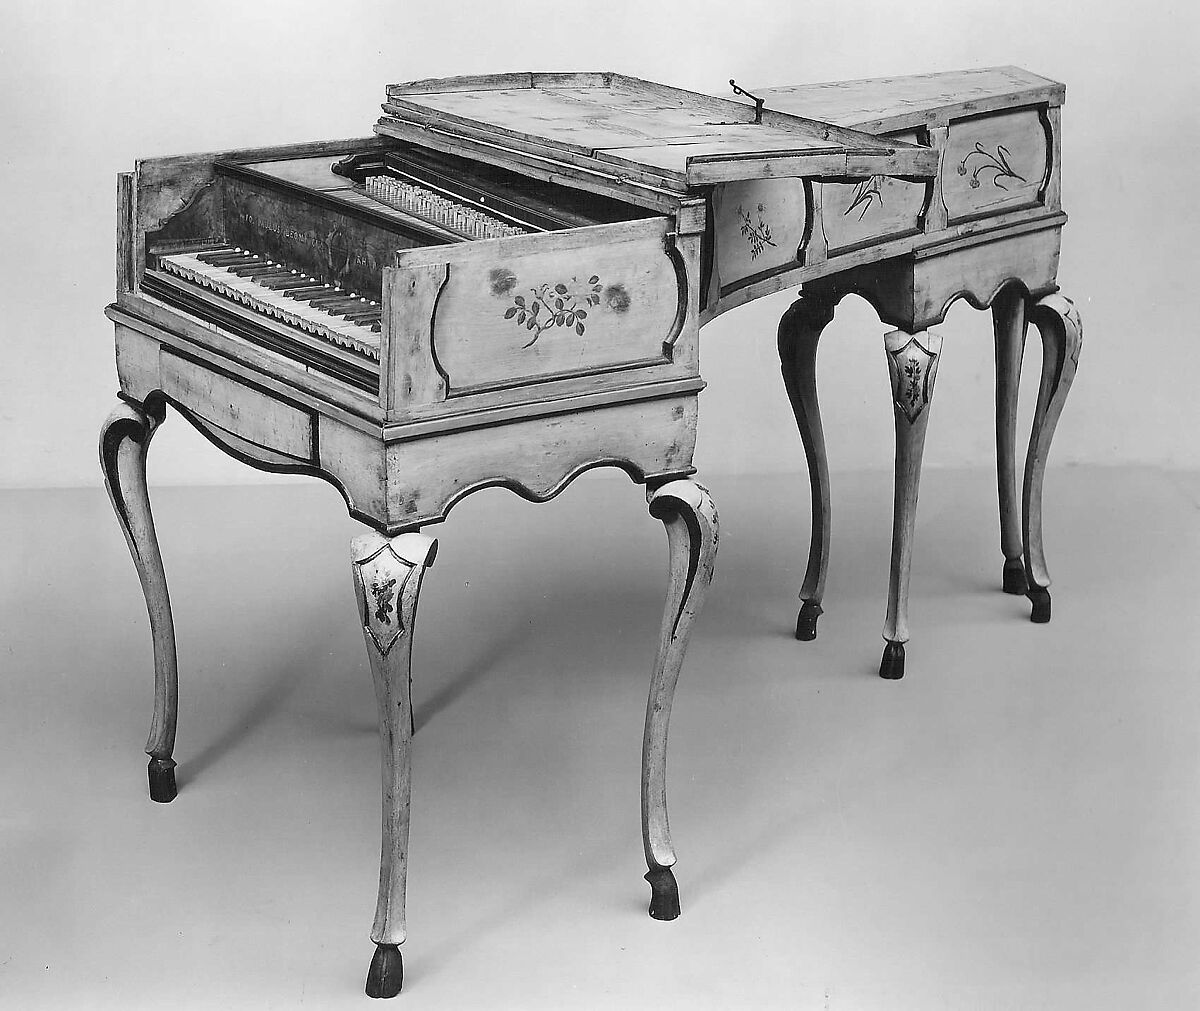 Harpsichord, Giovanni Paolo Leoni (Italian, active late 18th century), Wood, various materials, Italian 